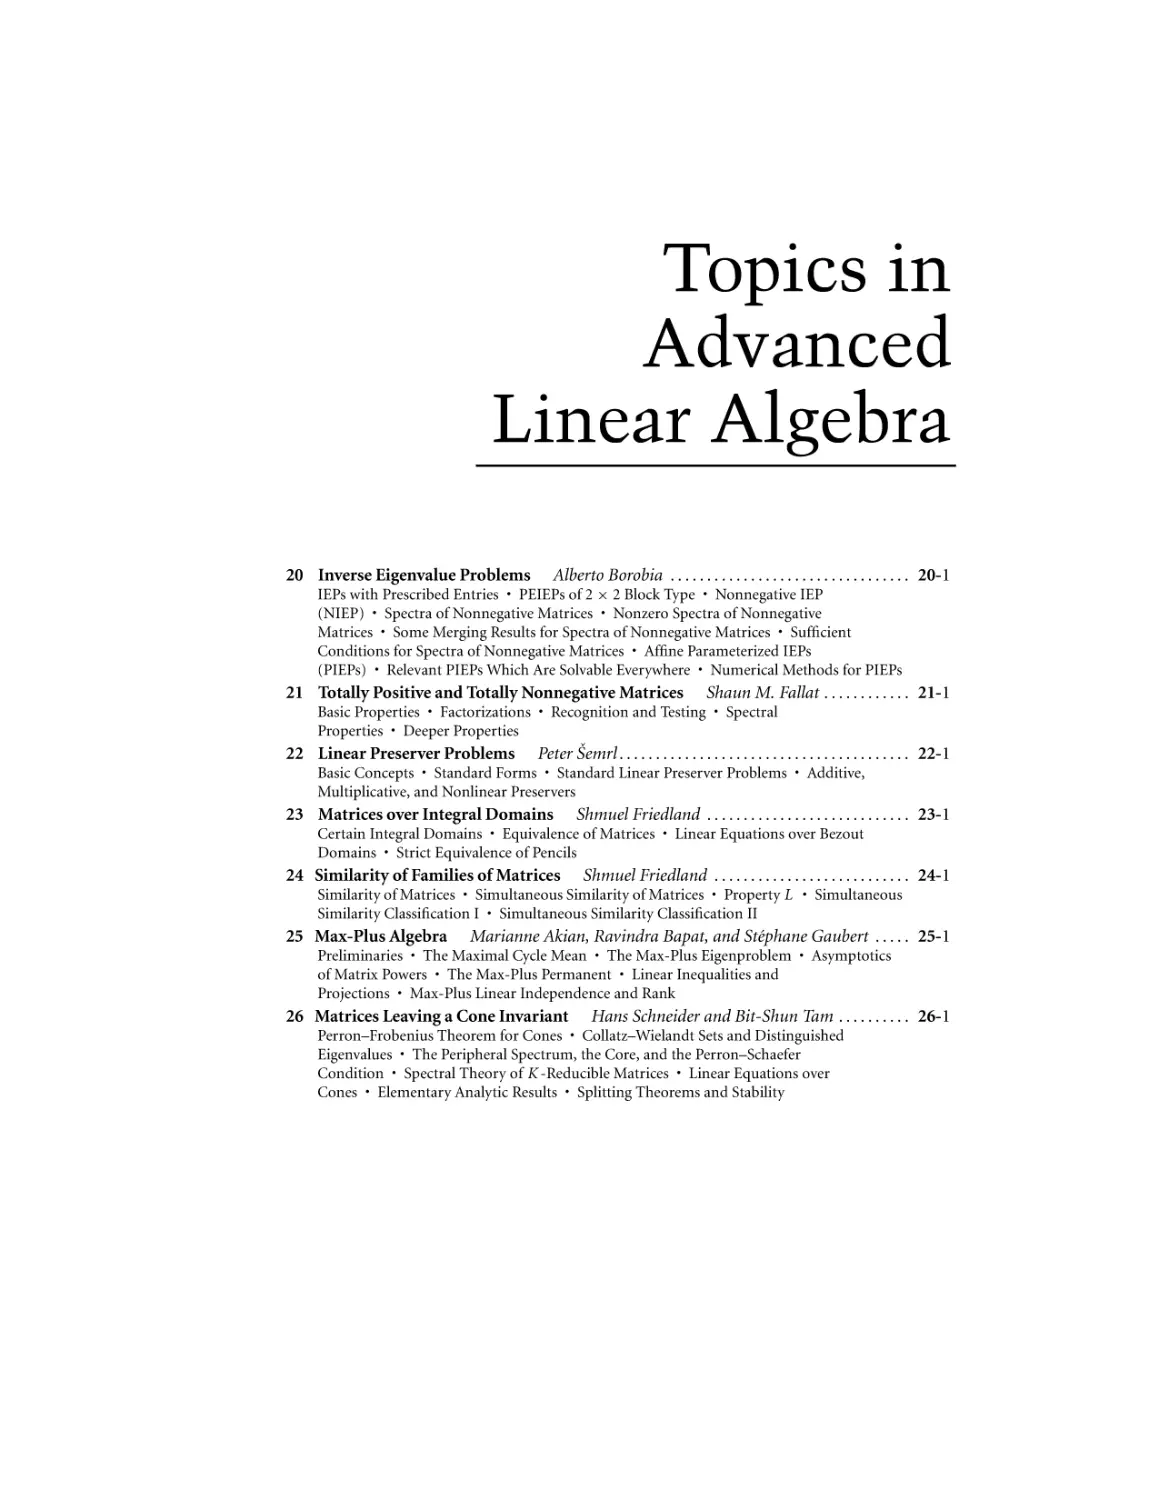 Topics in Advanced Linear Algebra